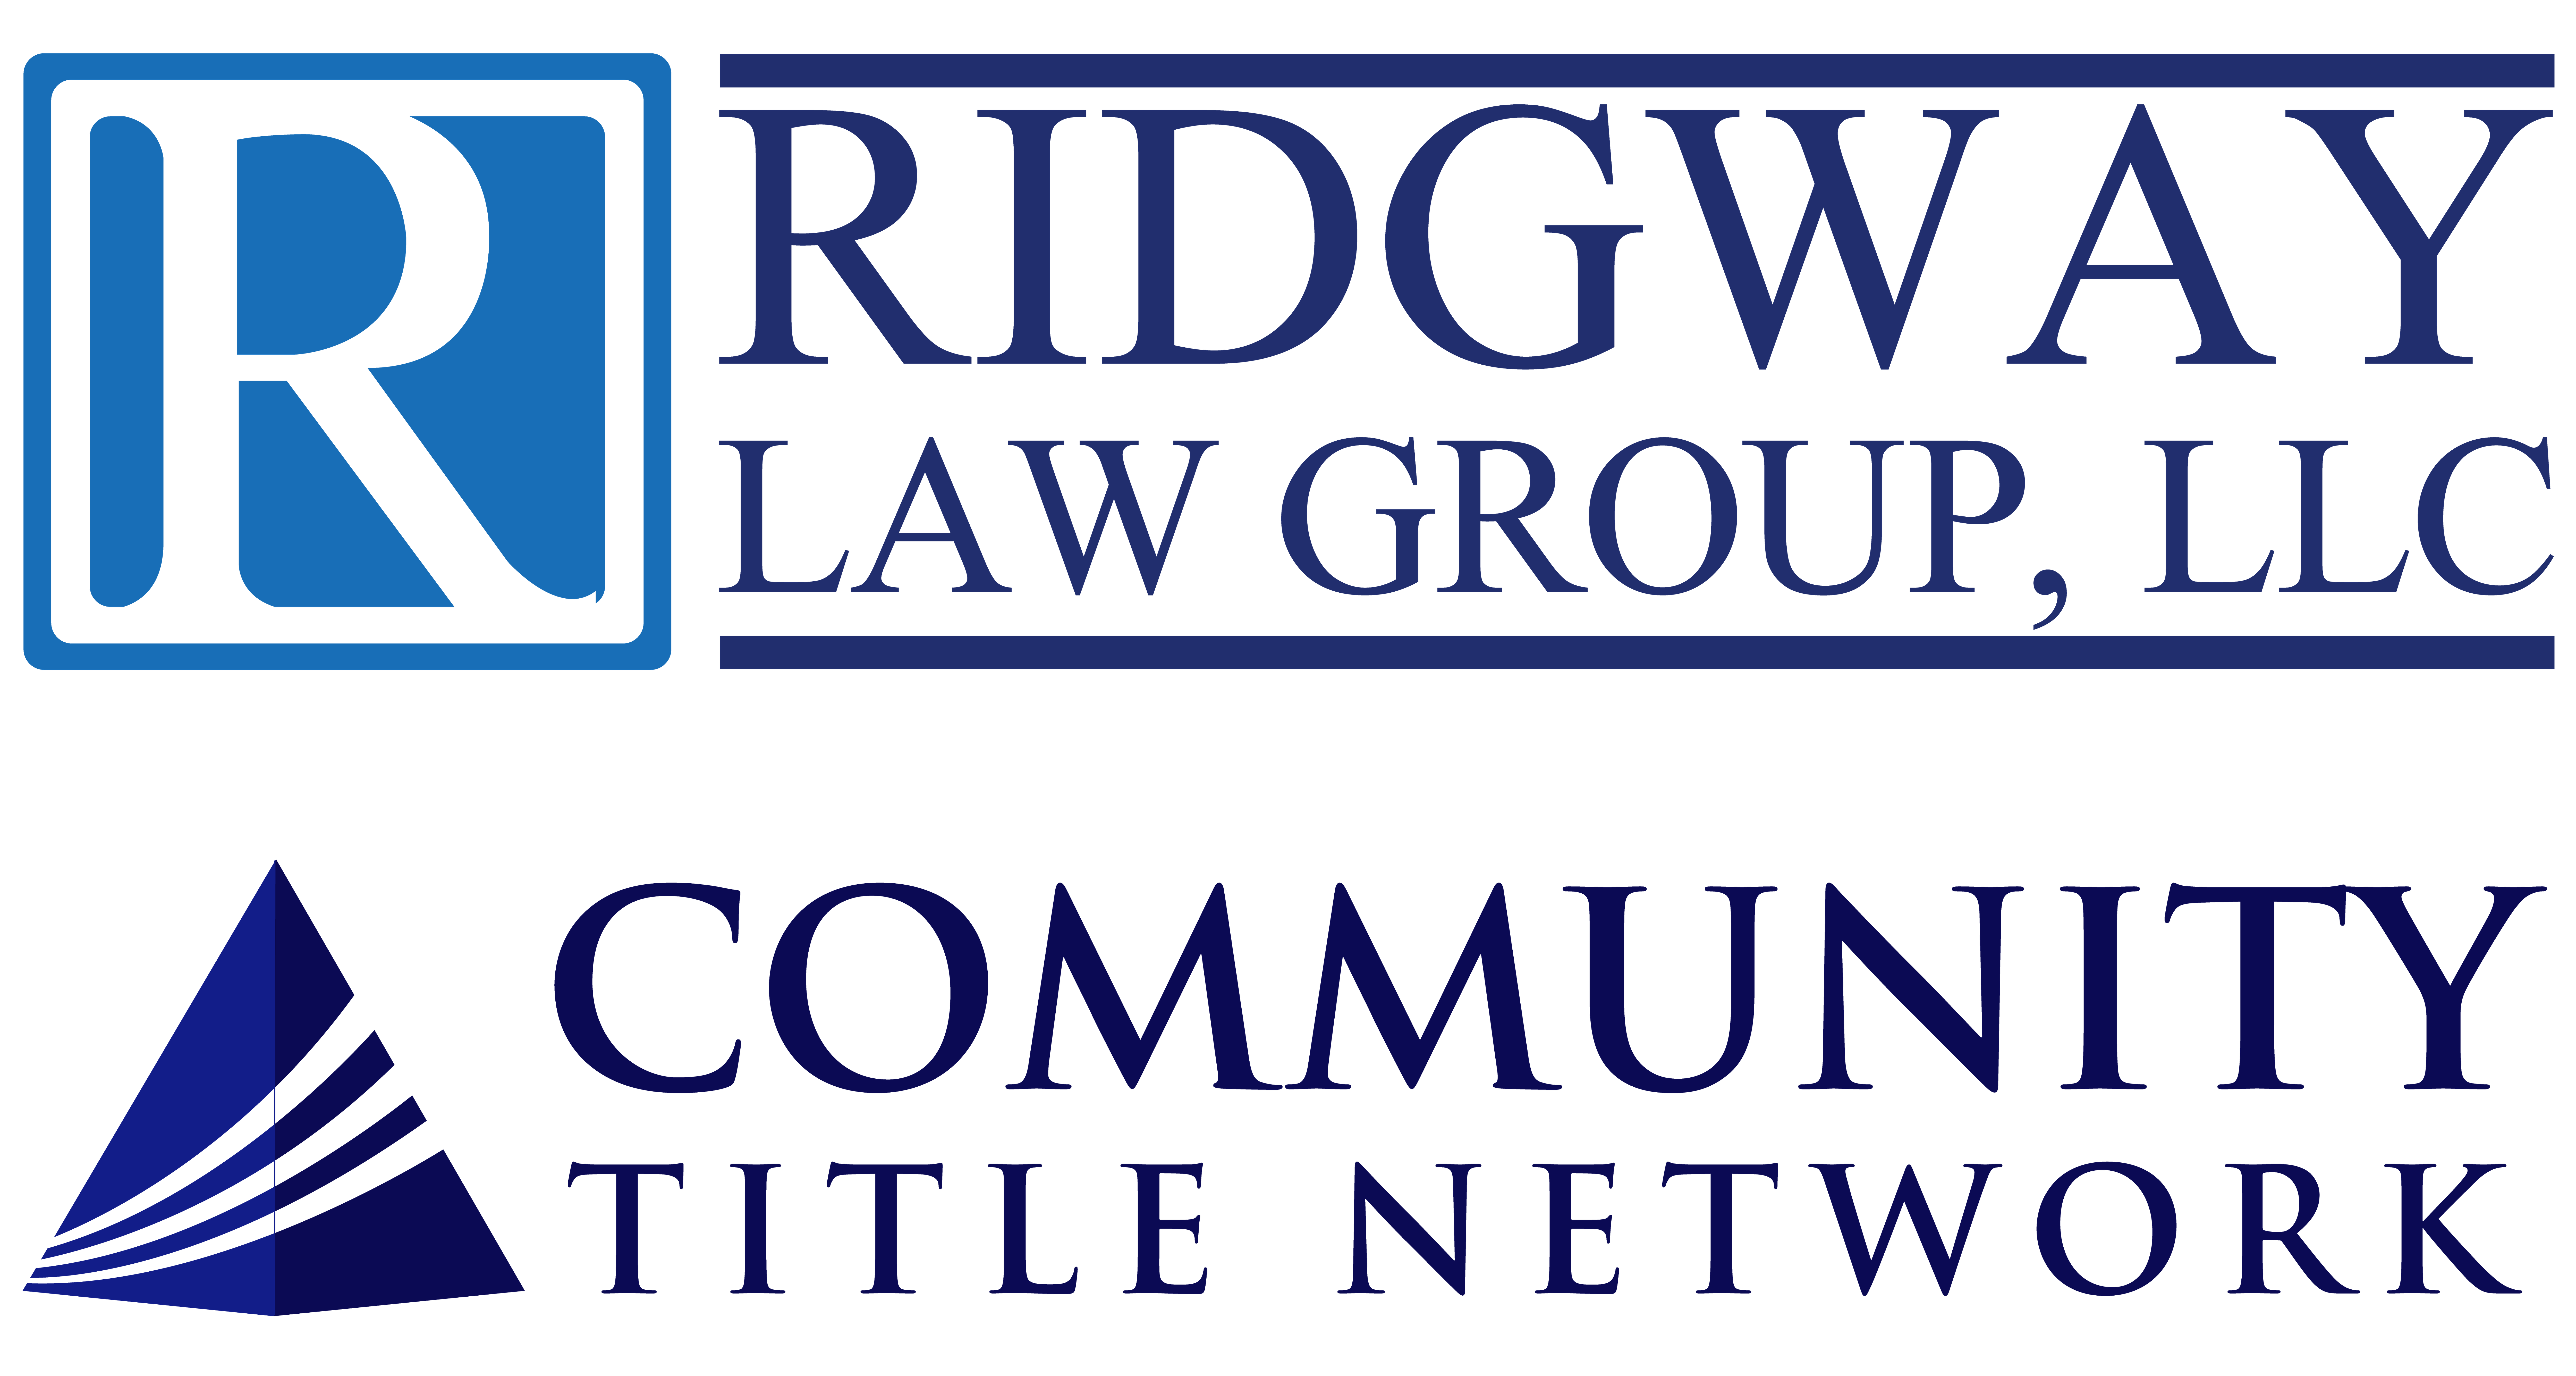 Ridgway Law Group, LLC.